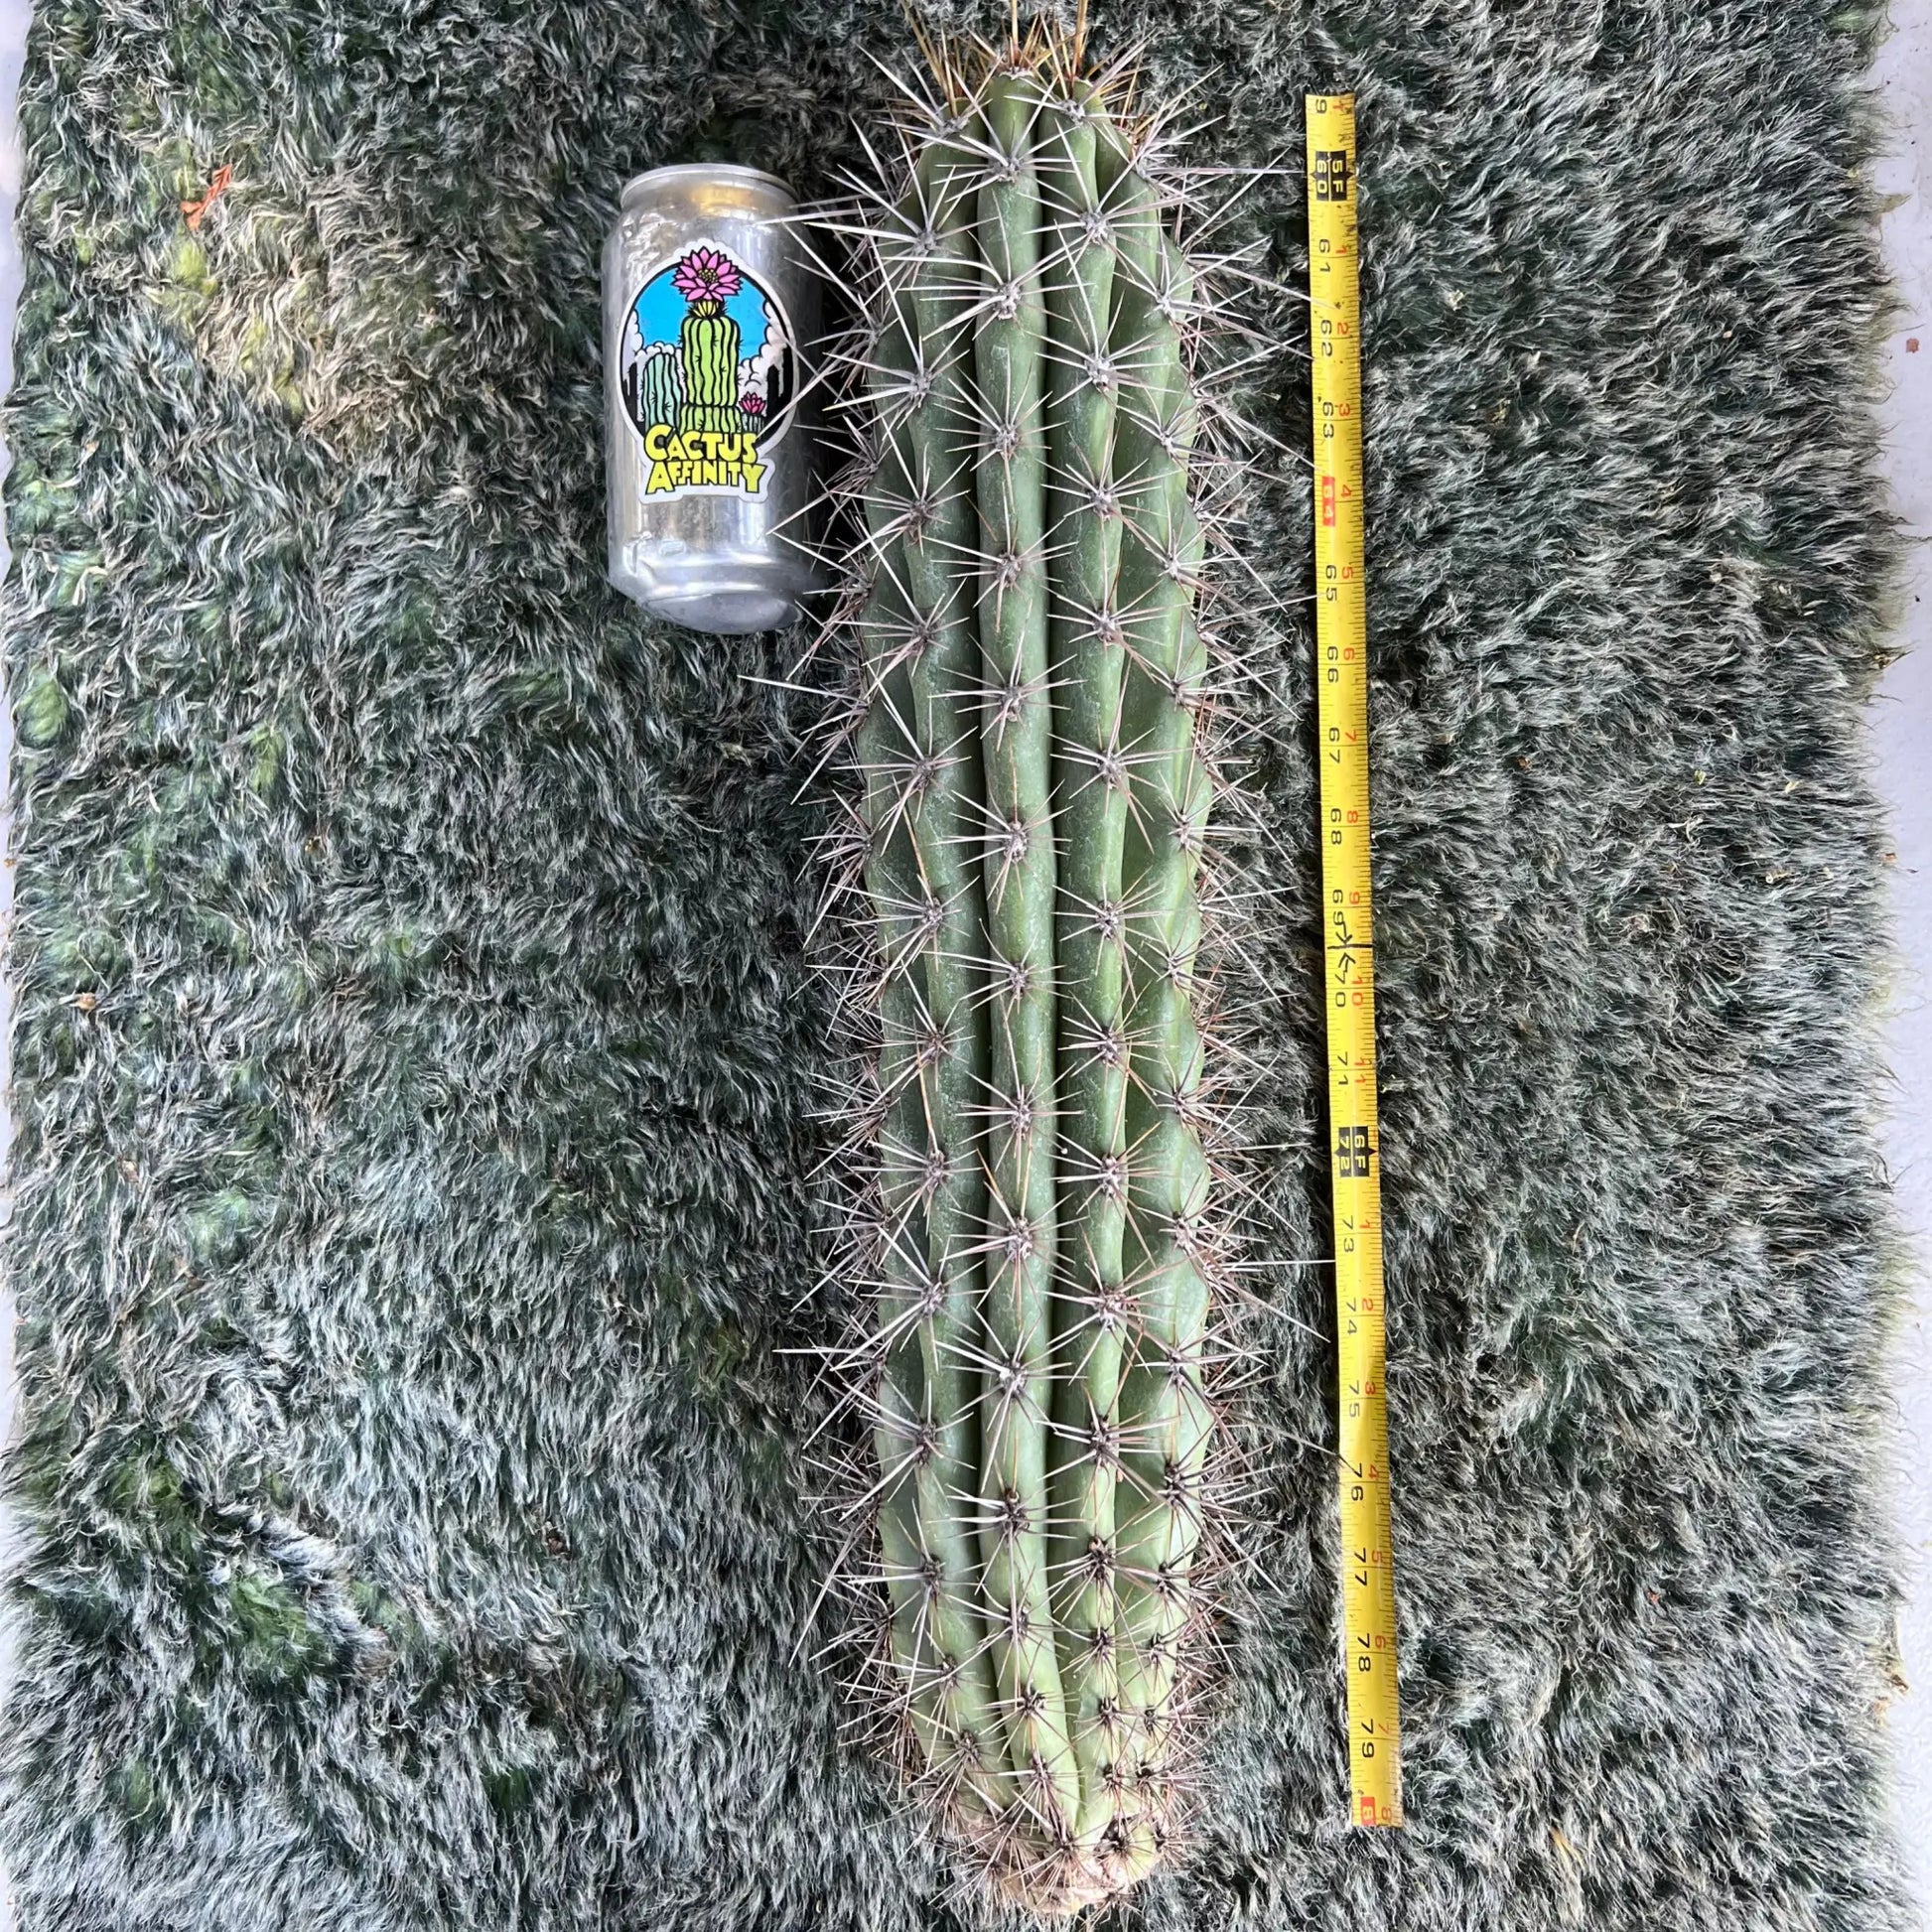 werdermannianus - B and Cactus - big 20” cutting